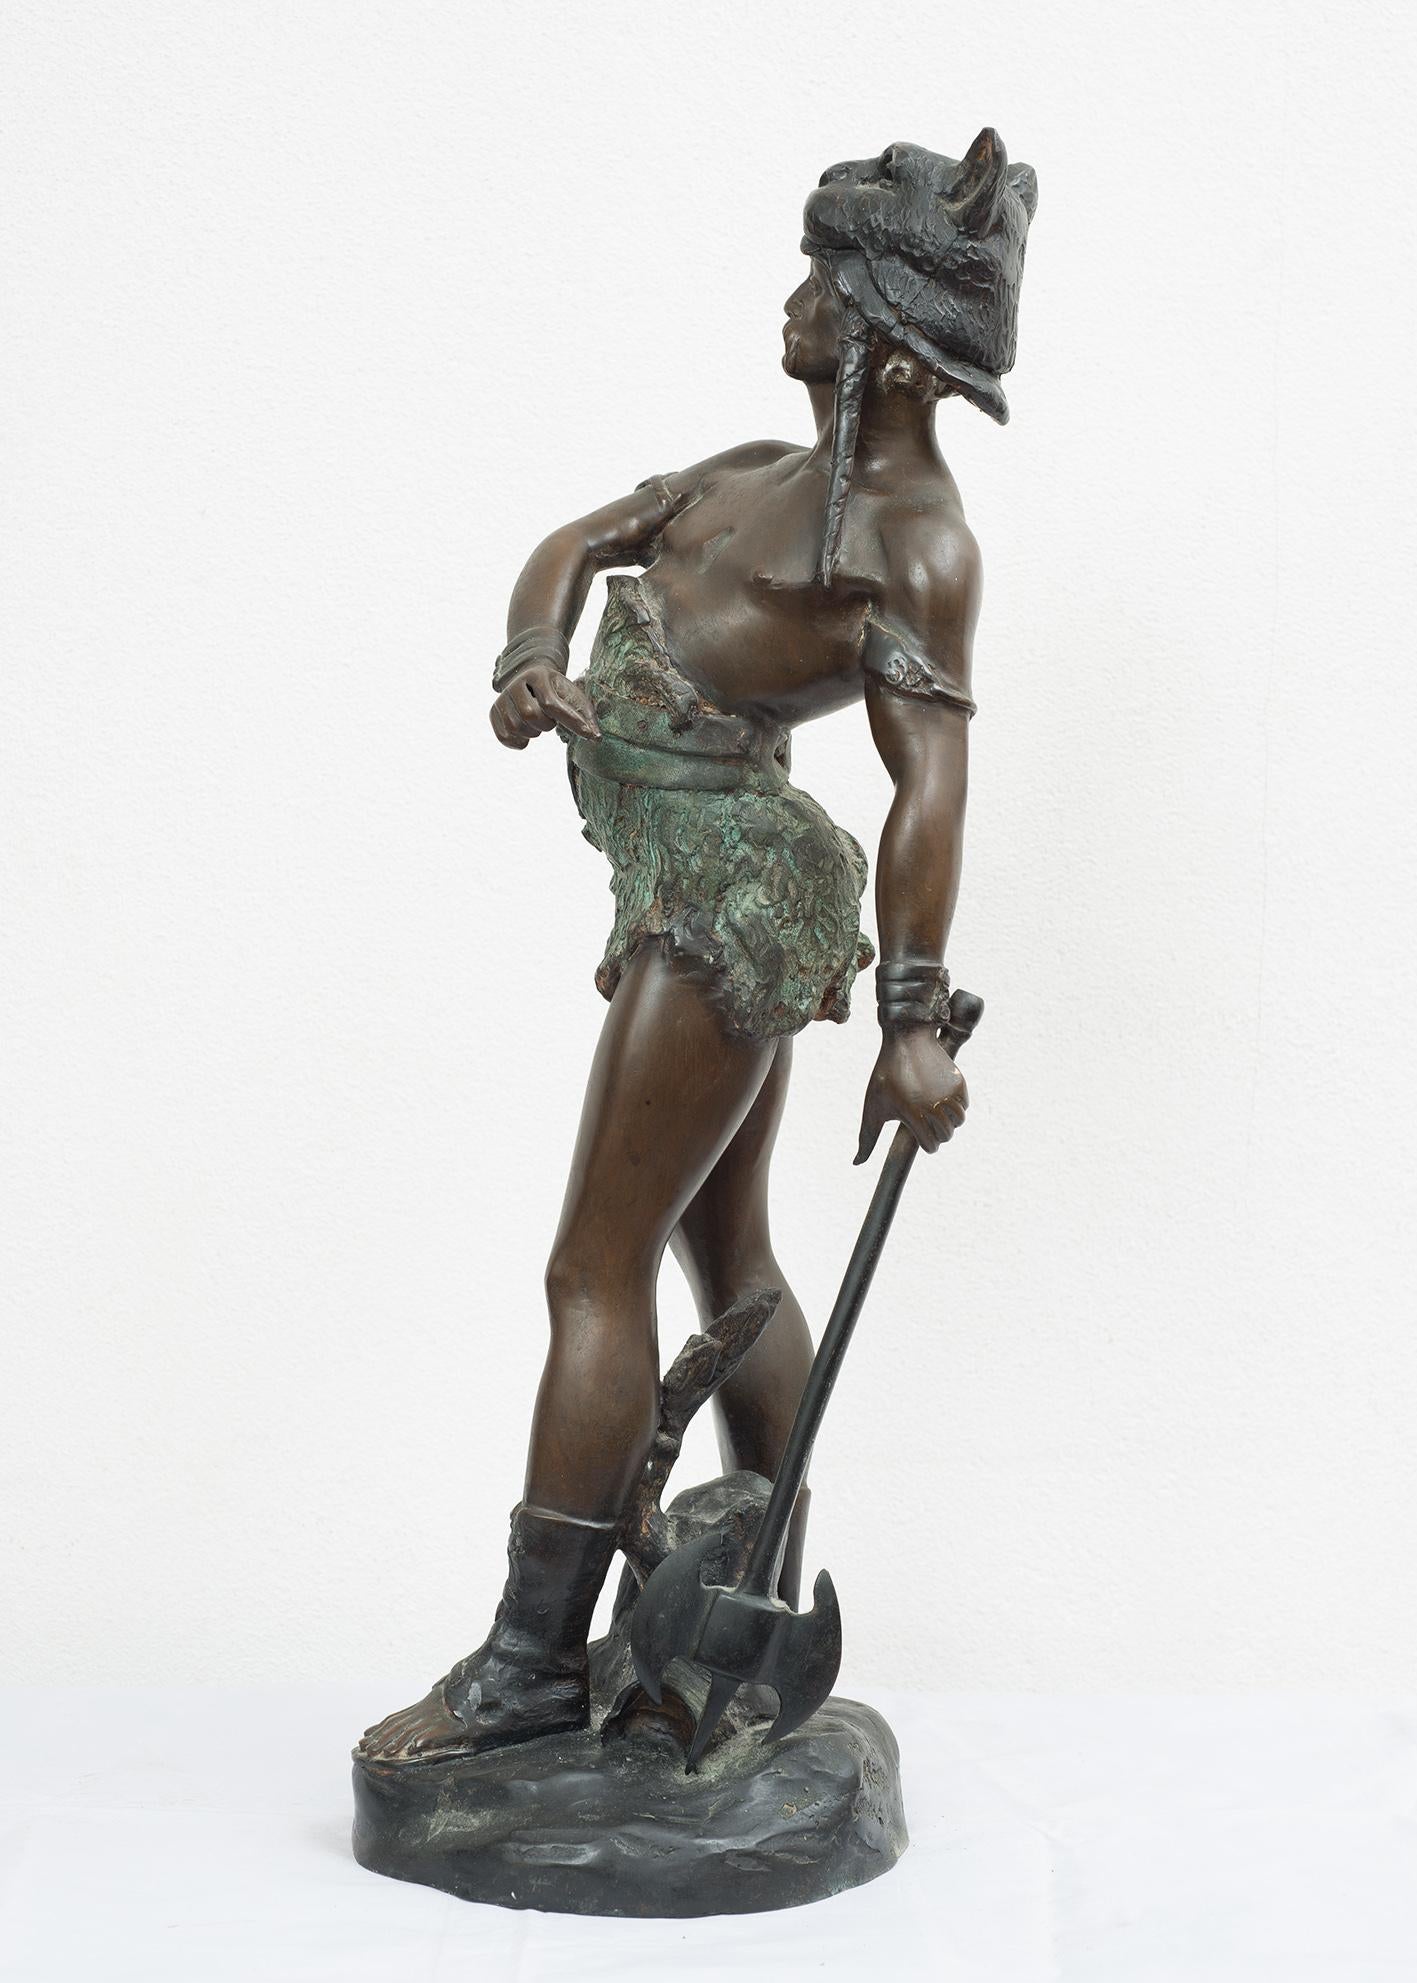 Antique patinated bronze sculpture depicting 